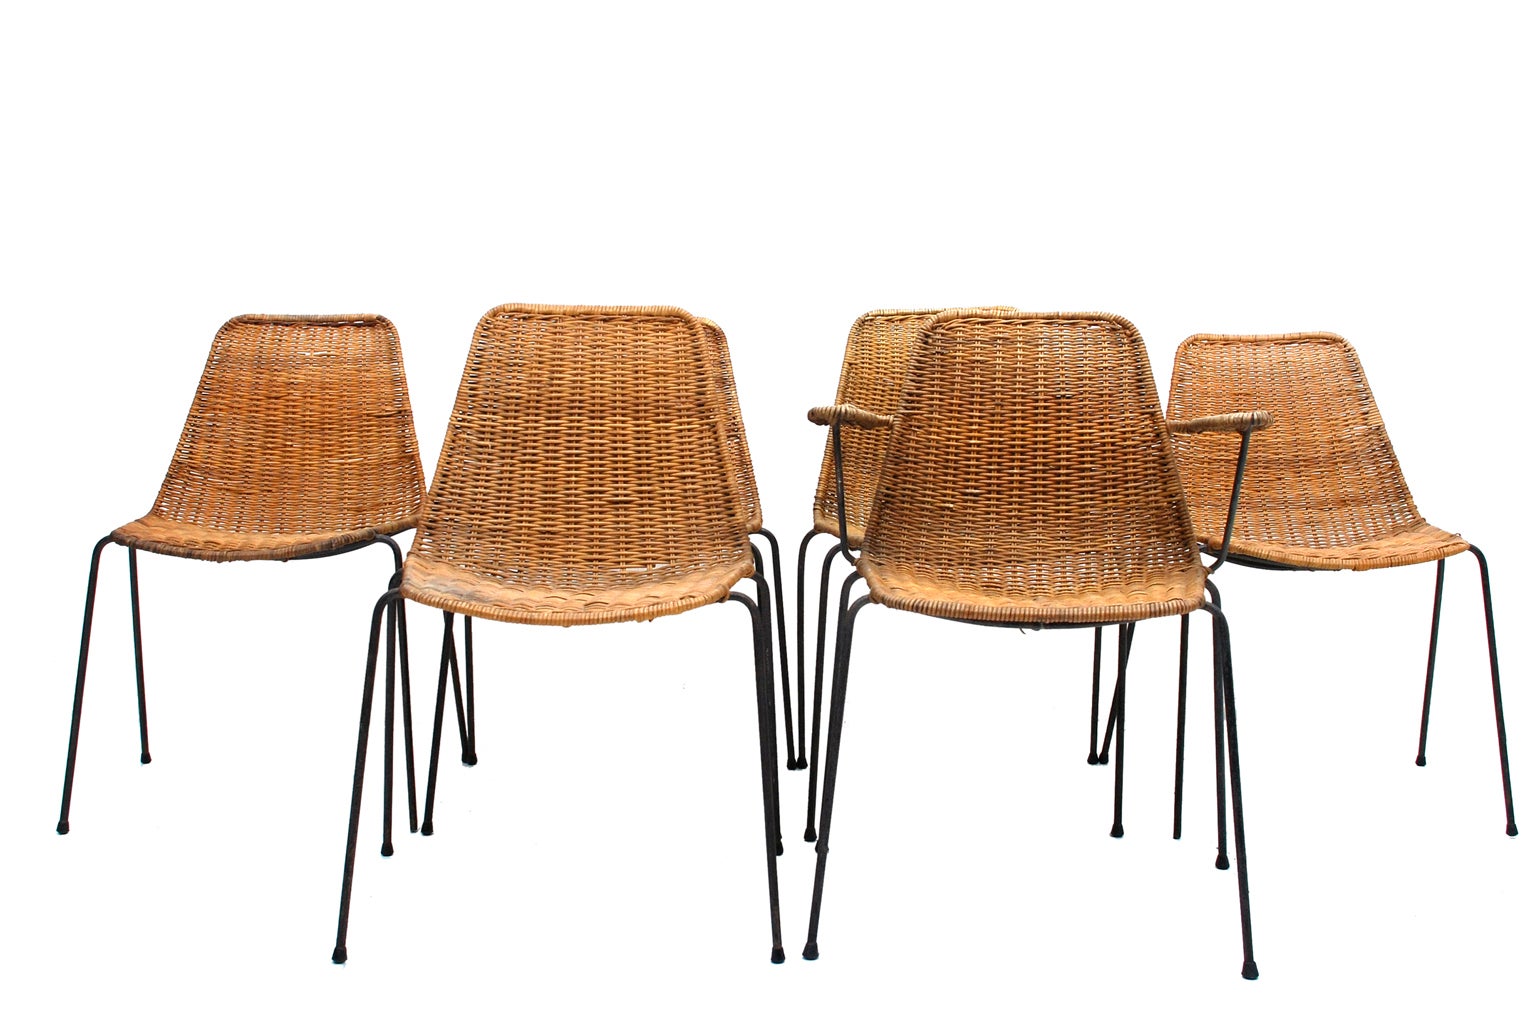 Modern Italian Dining Chairs "Basket" by Franco Legler